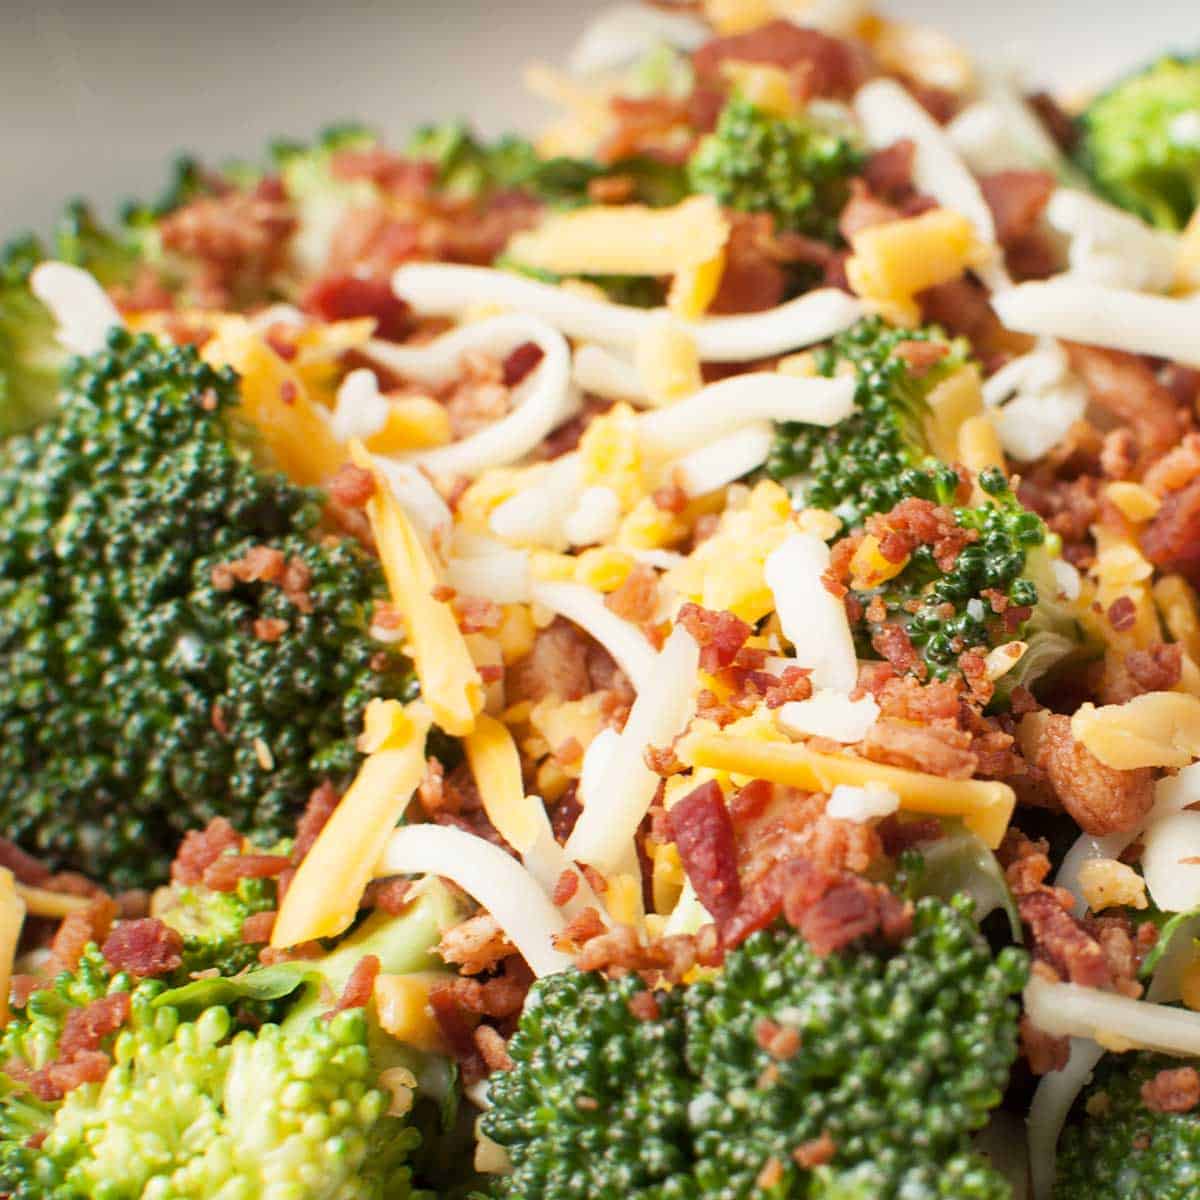 up close view of broccoli salad